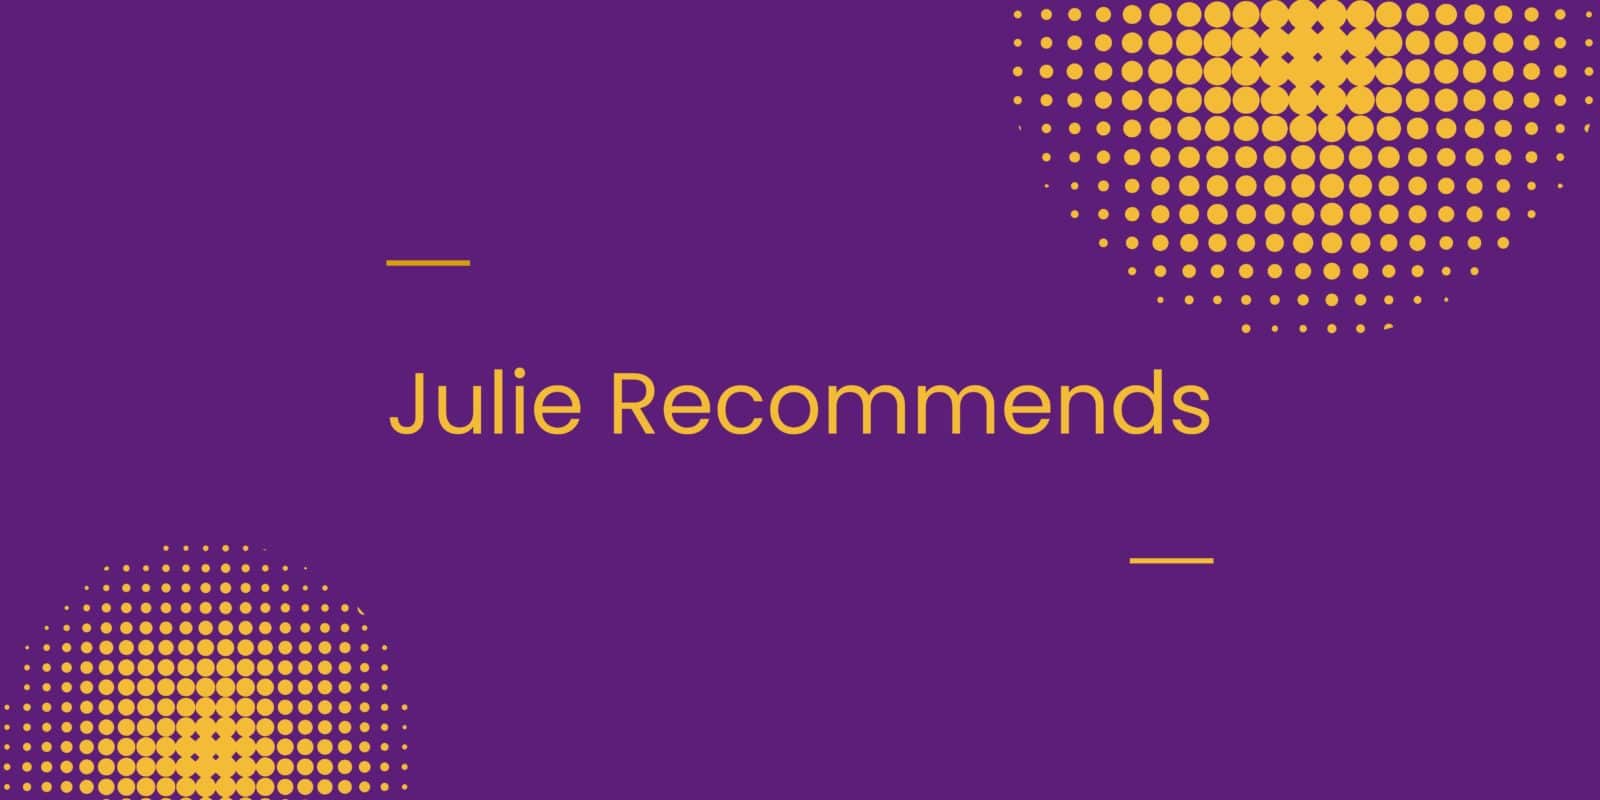 Julie Recommends